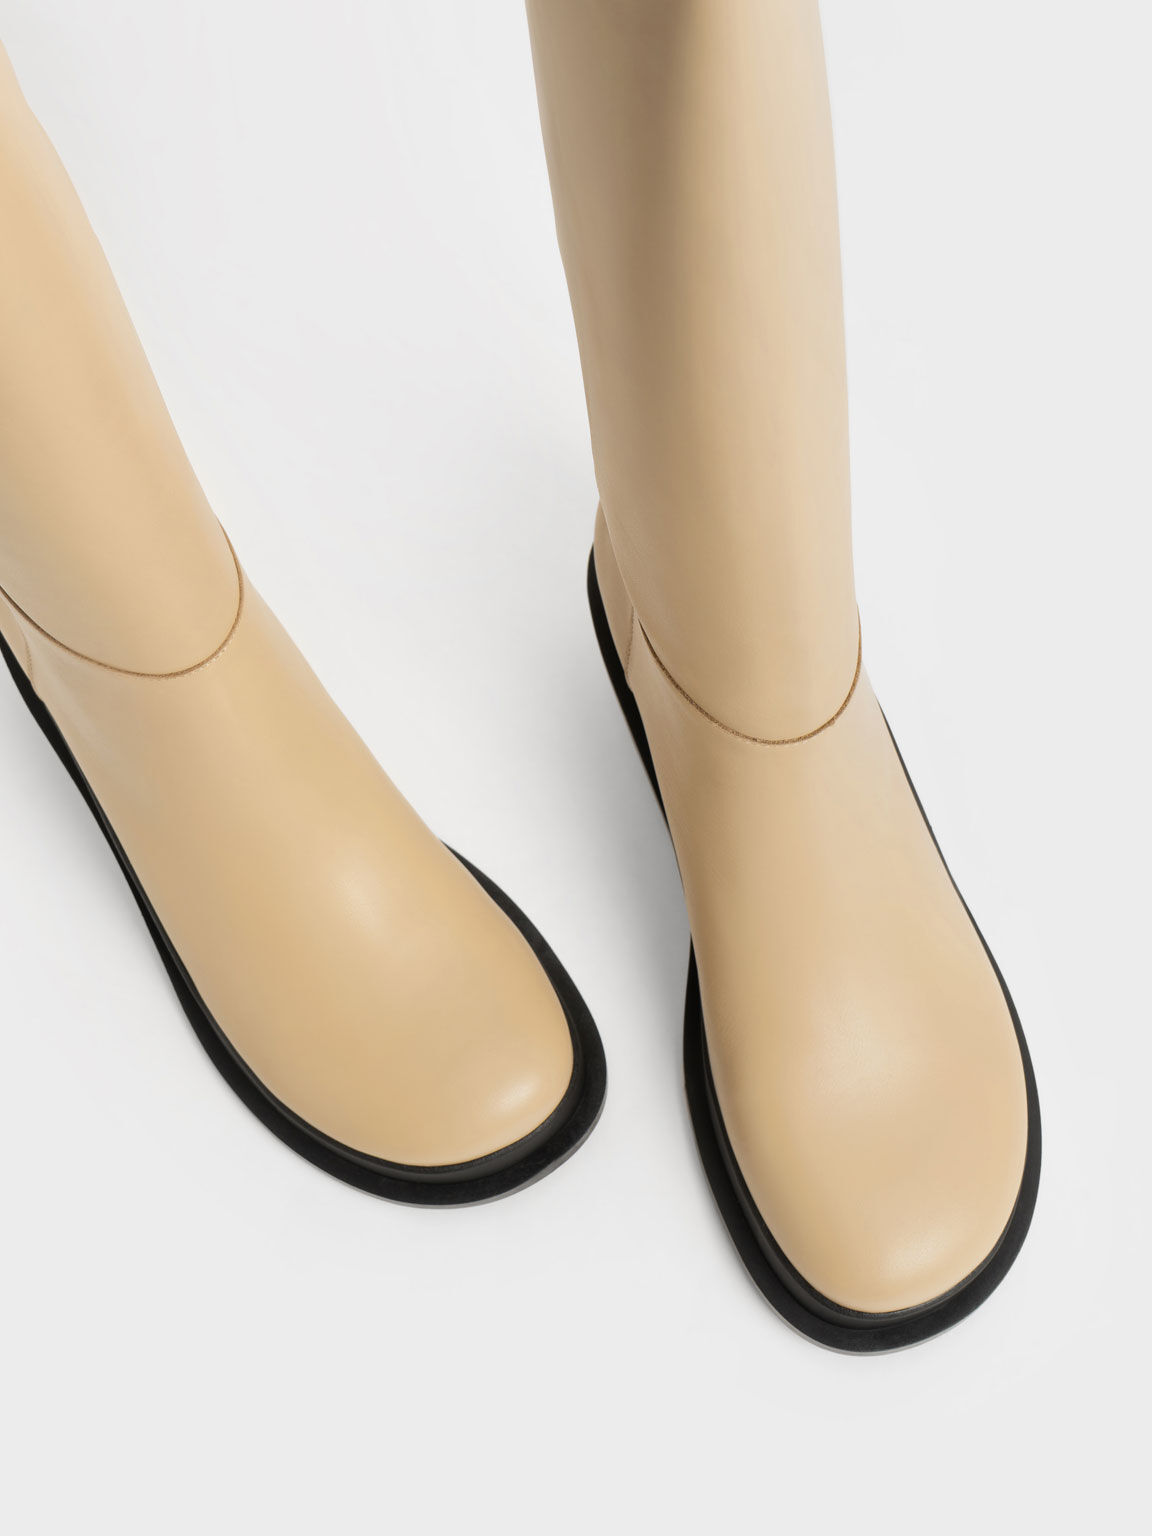 Frida Leather Knee-High Boots, Sand, hi-res